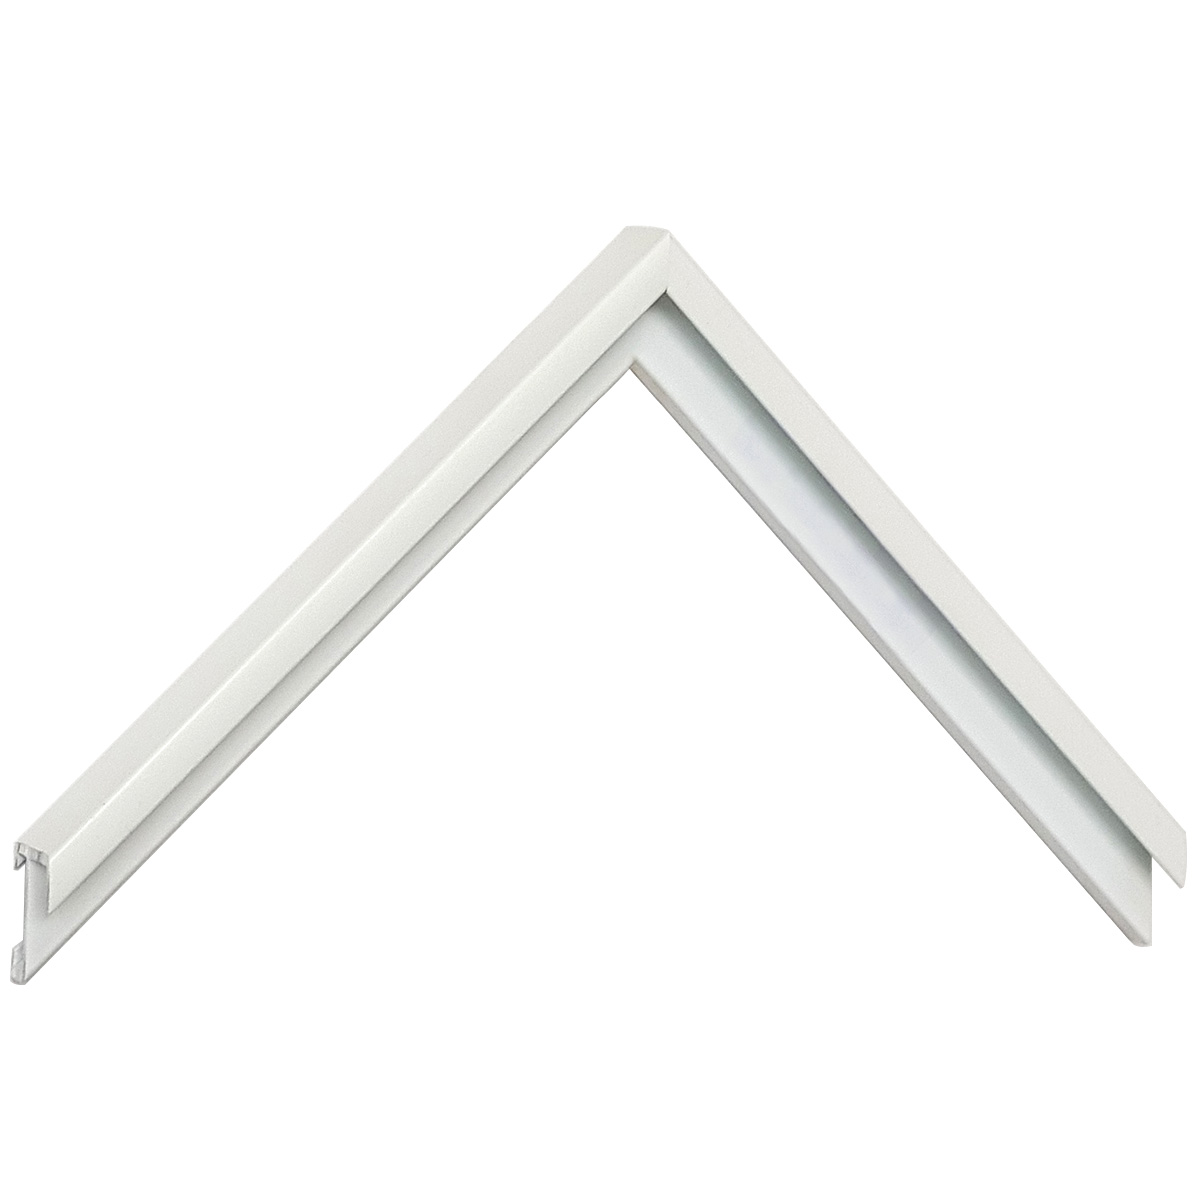 Aluminiumleiste Serie 11 flach Weiss glänzend - Musterwinkel